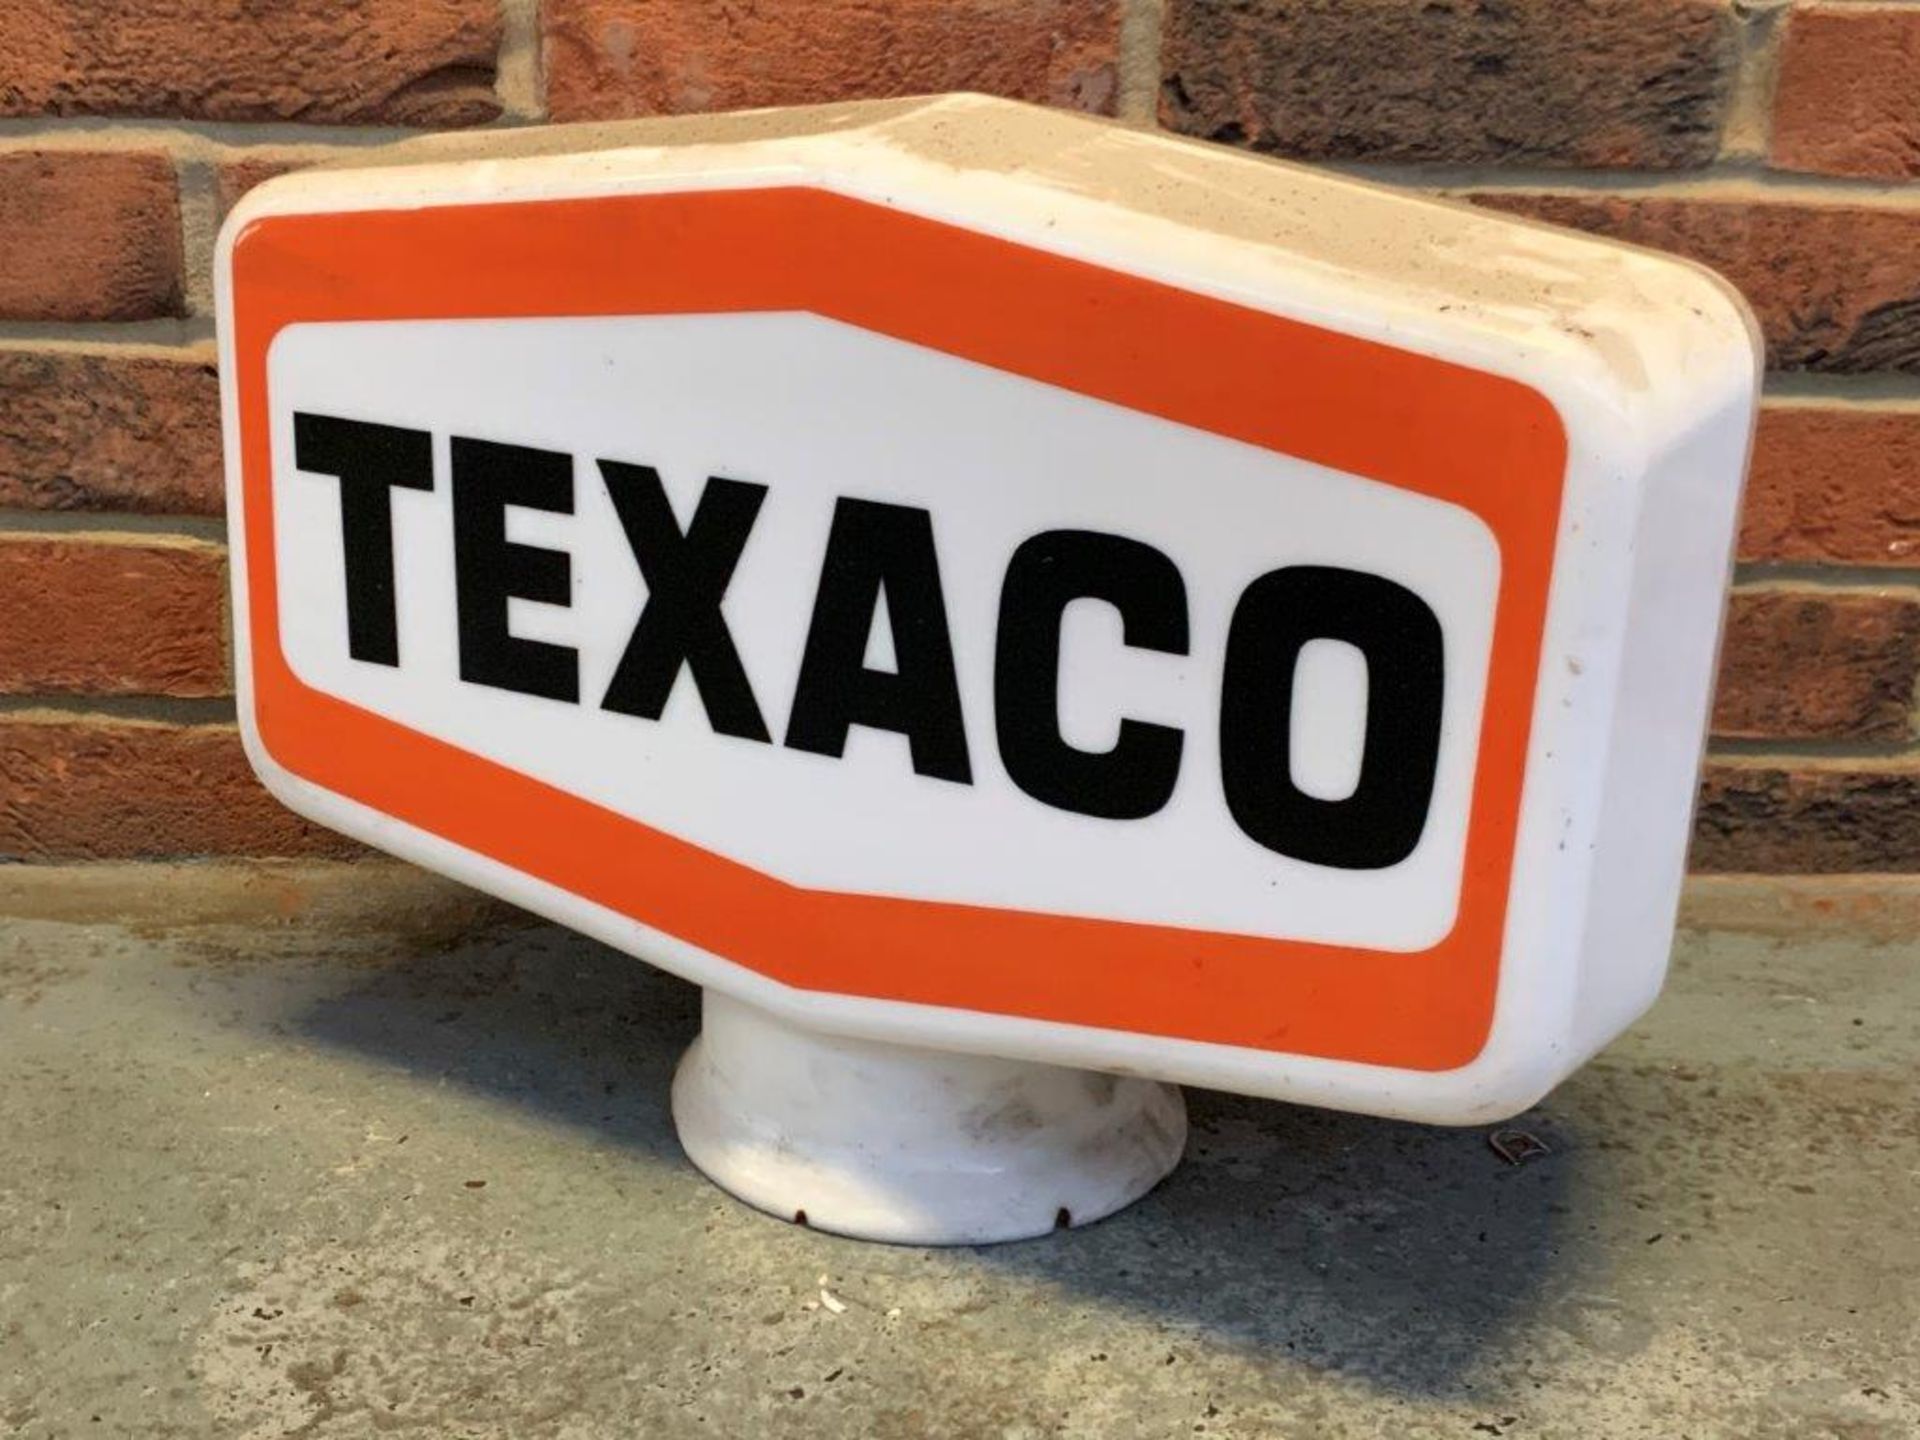 Original Texaco Petrol Globe - Image 2 of 6